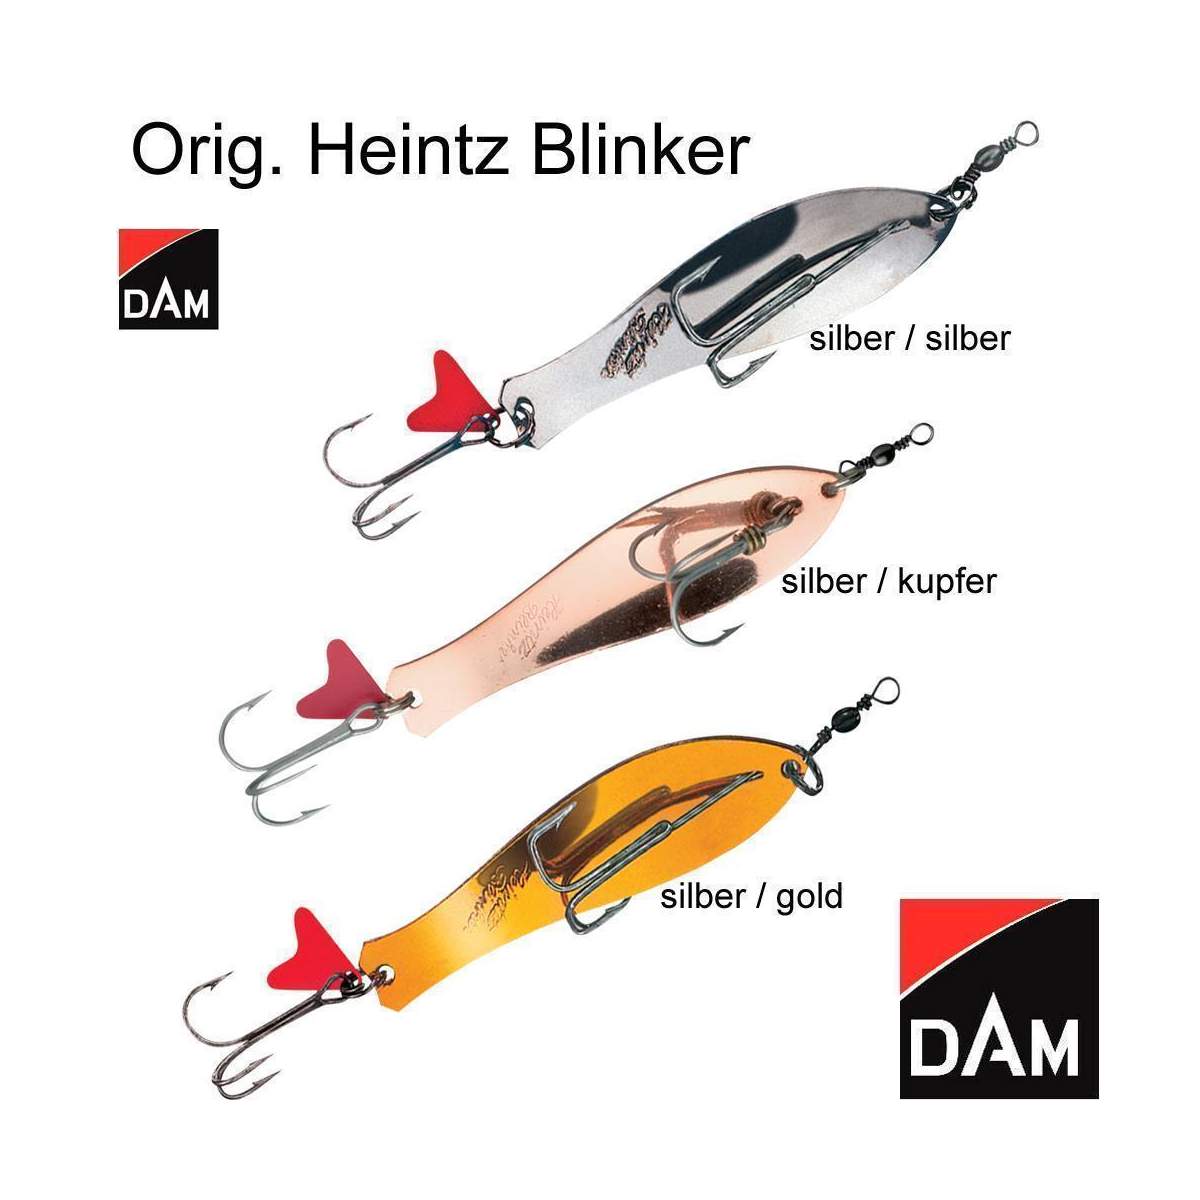 DAM Original Heintz Blinker, 3,99 €